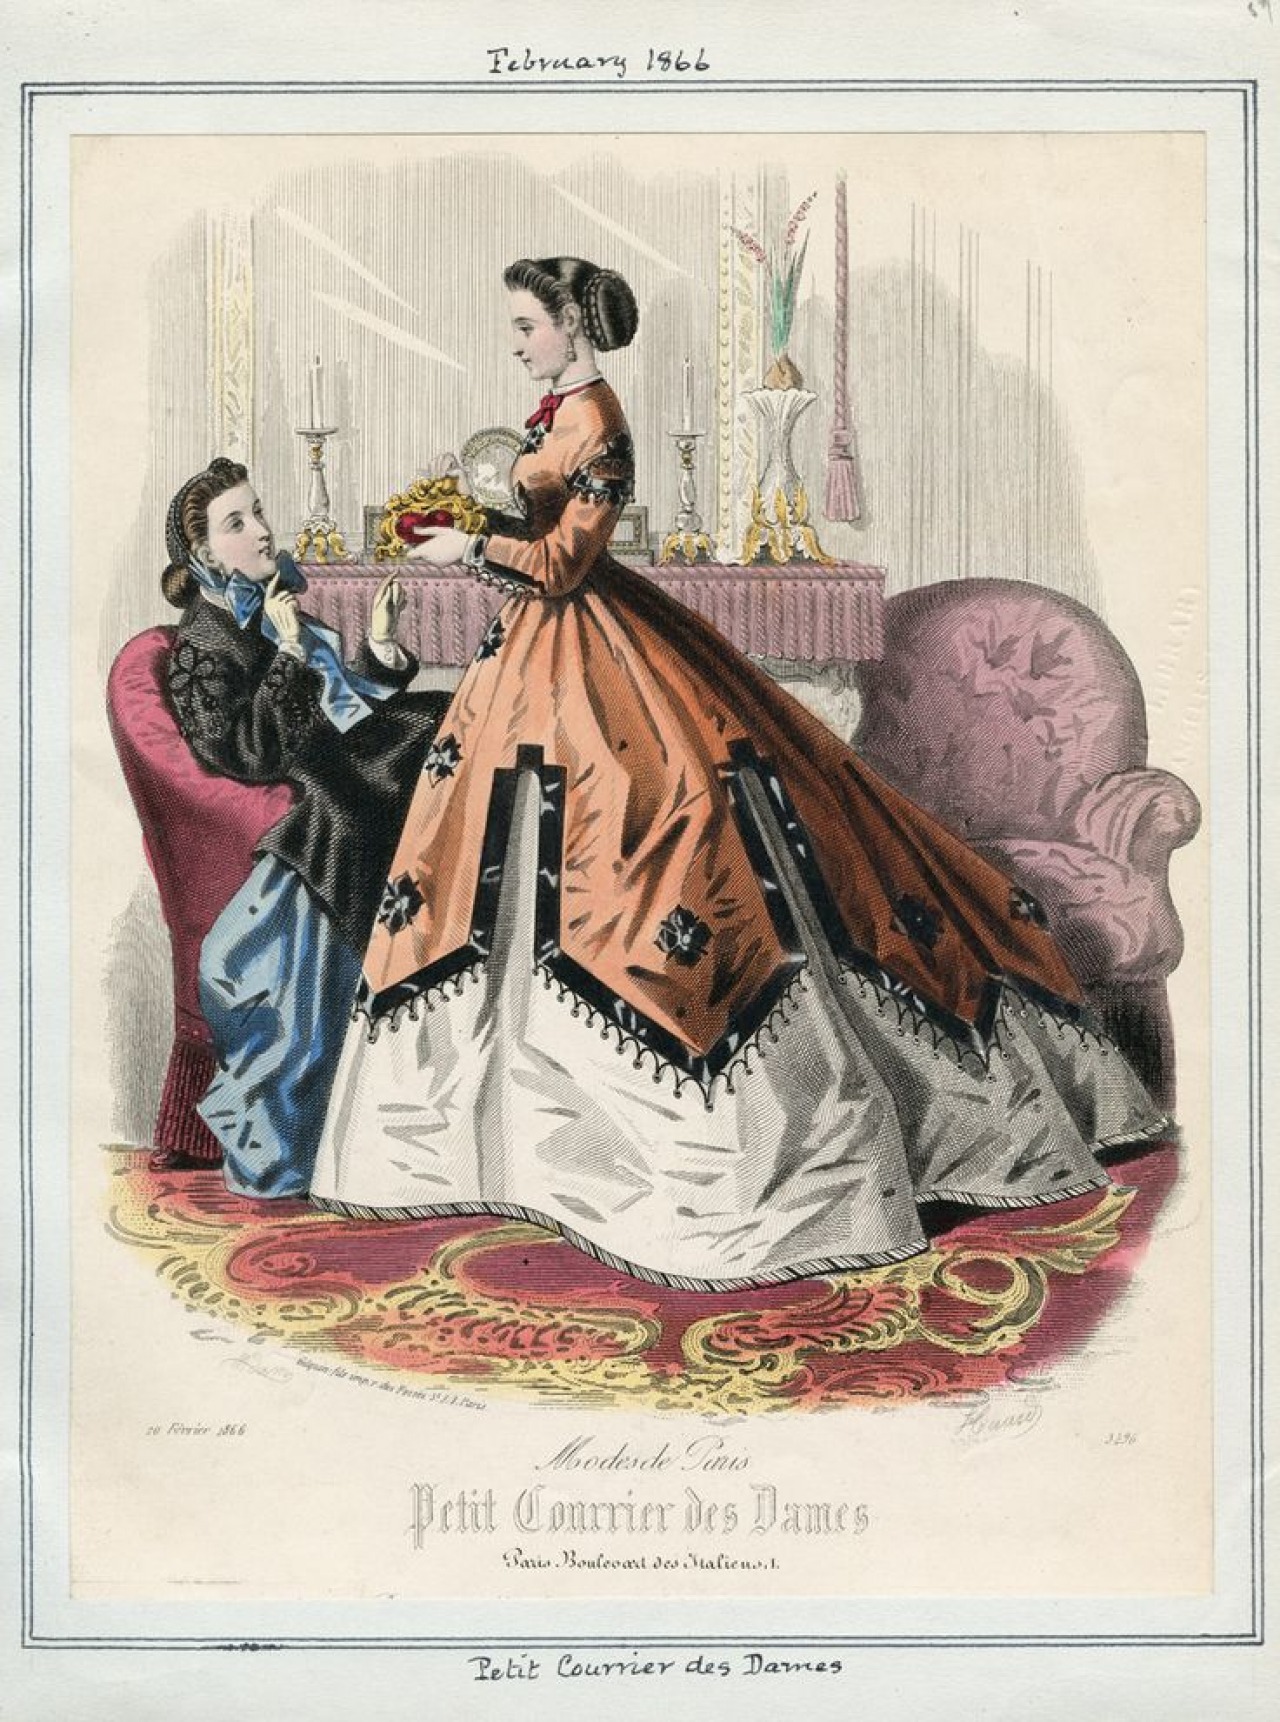 Late Hoop Era Fashion Plates Peterson's Magazine 1866-1870